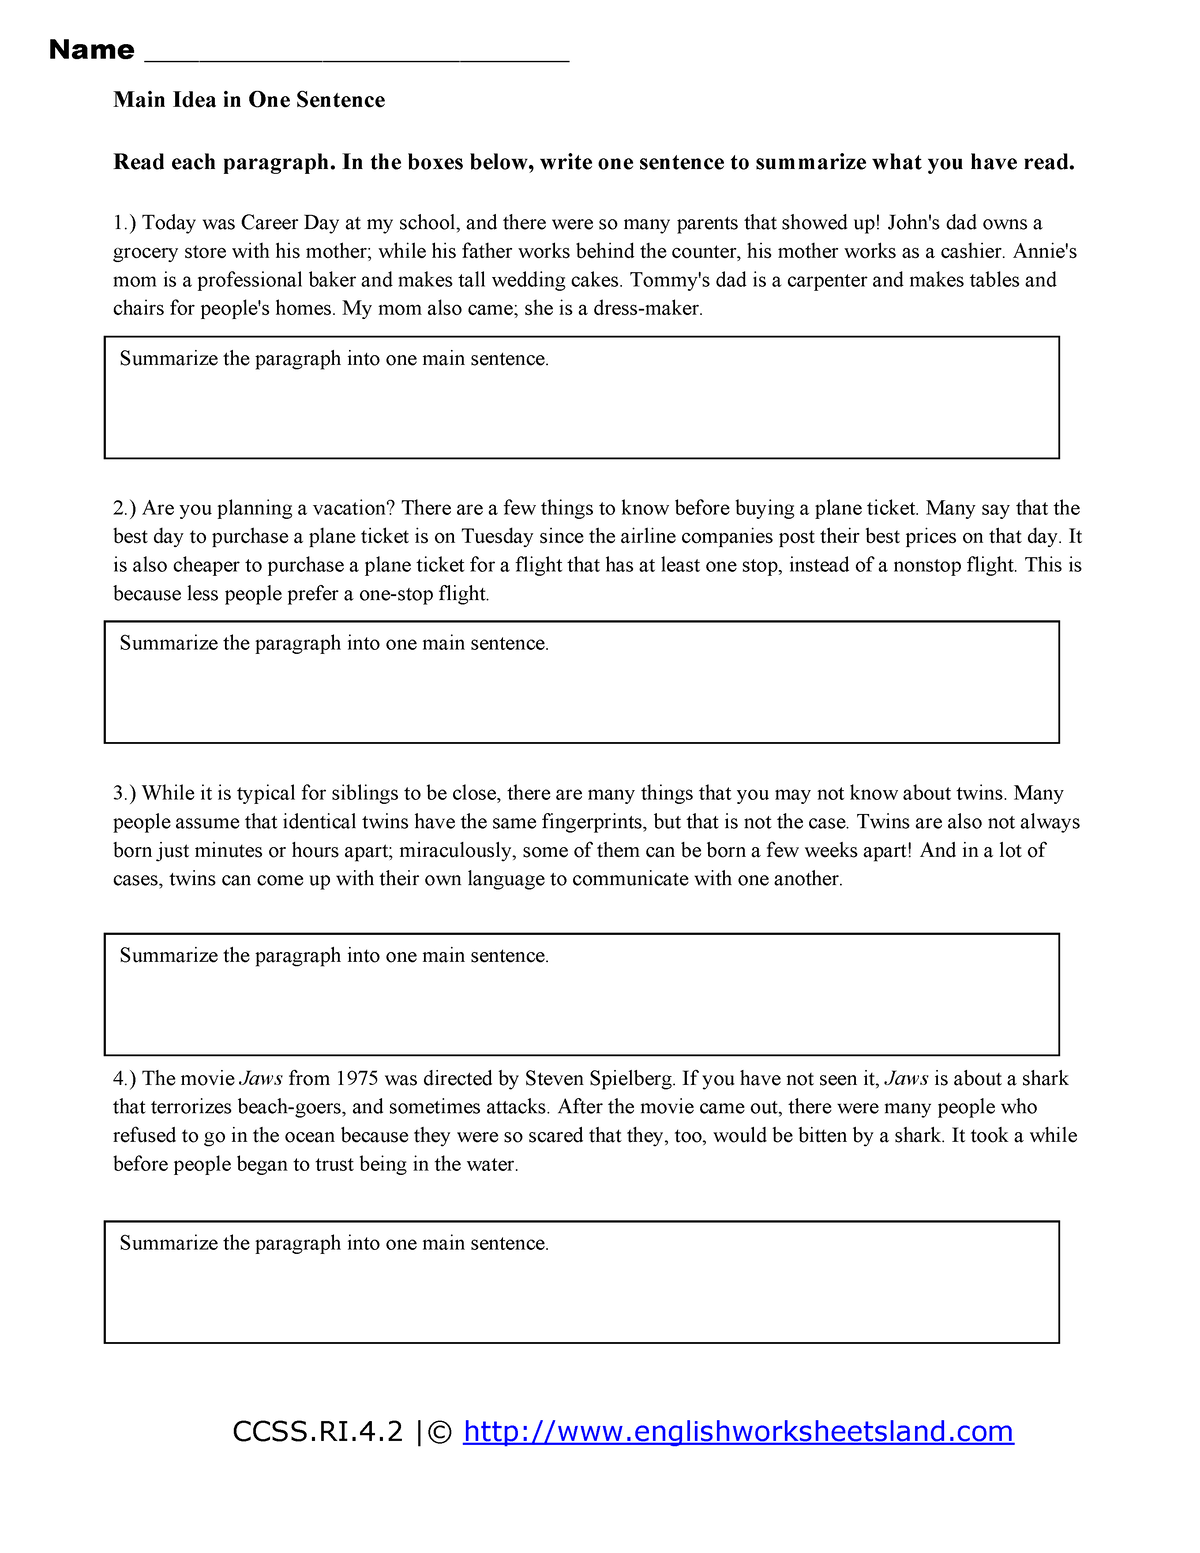 Summarizing worksheet 1 - Main Idea in One Sentence Read each paragraph ...